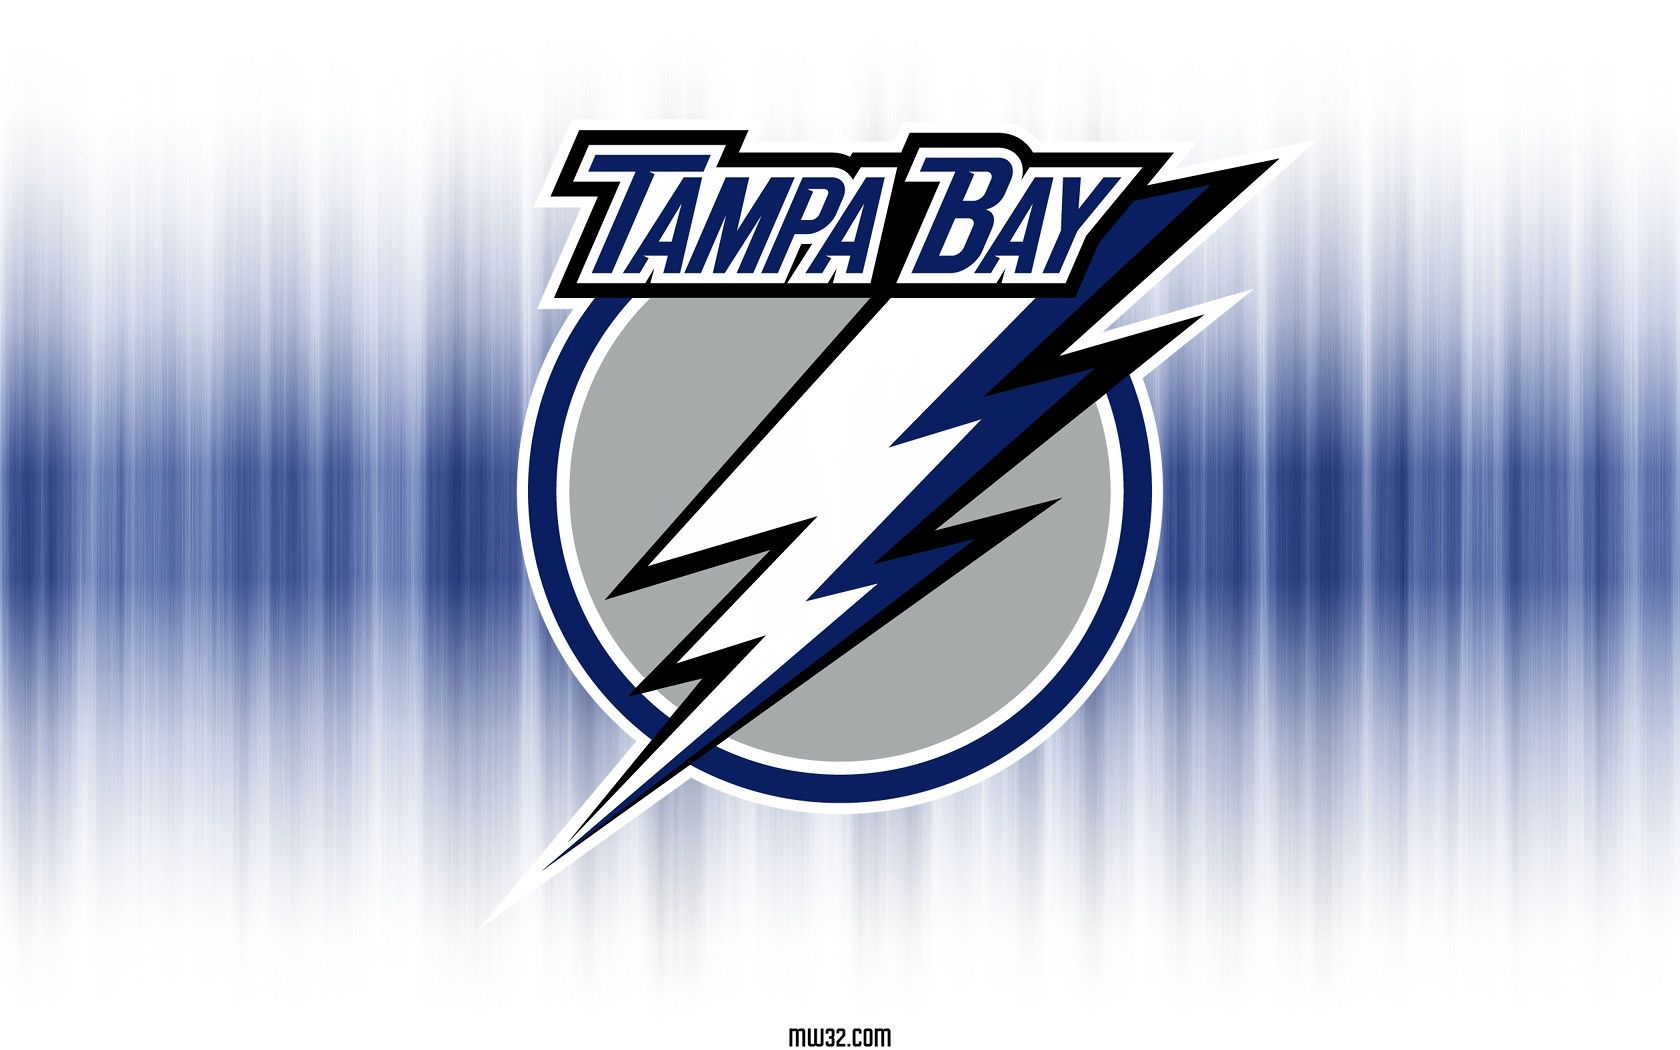 Tampa Bay Lightning Wallpaper - WallpaperSafari